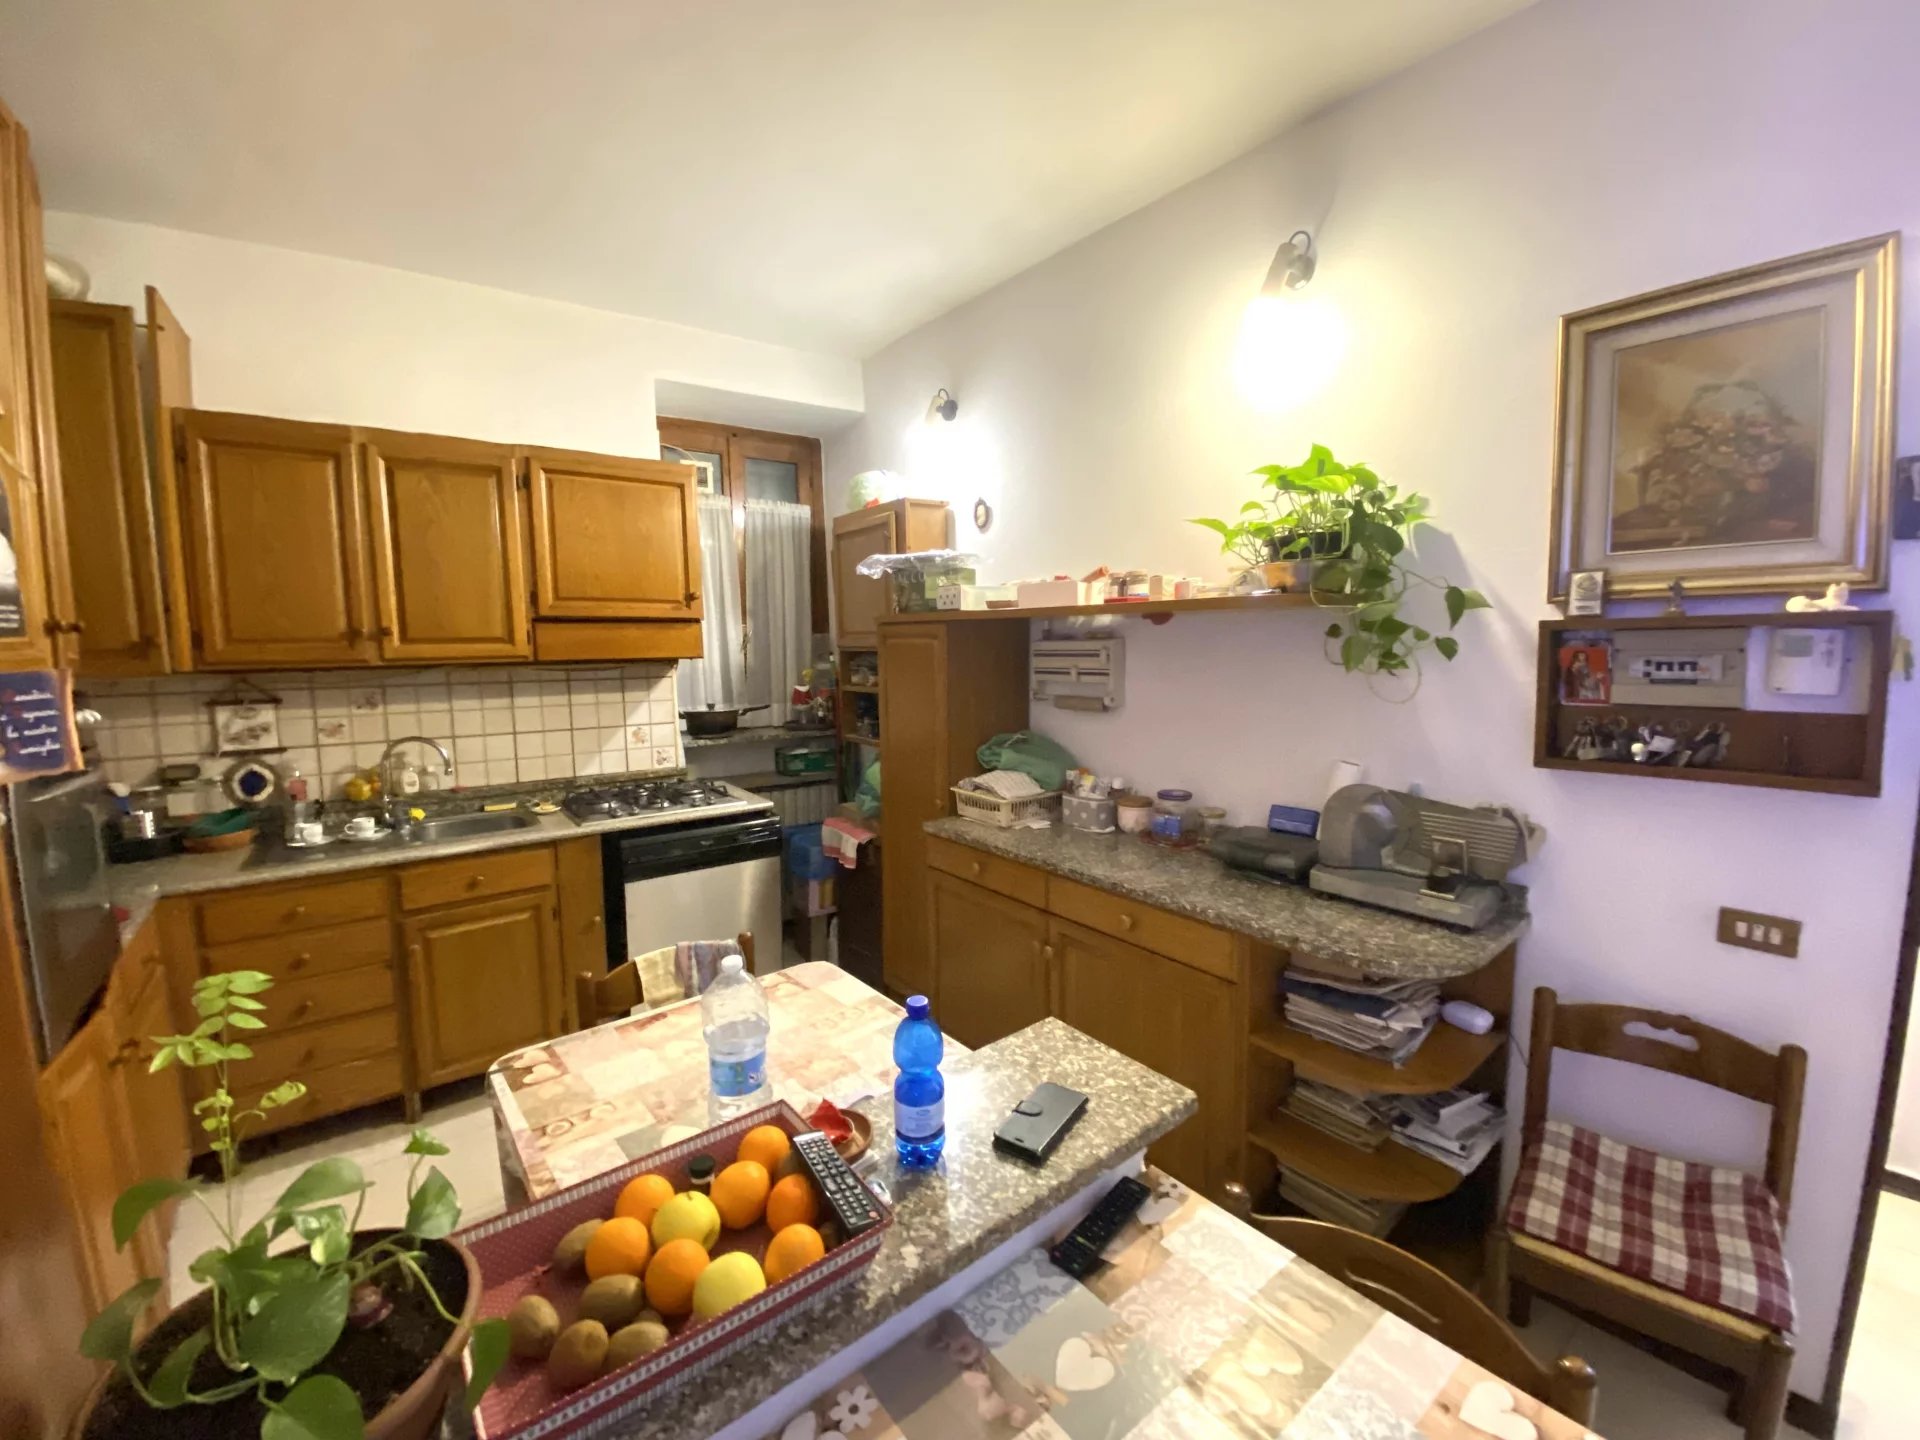 Sale Apartment - Como Civiglio - Italy